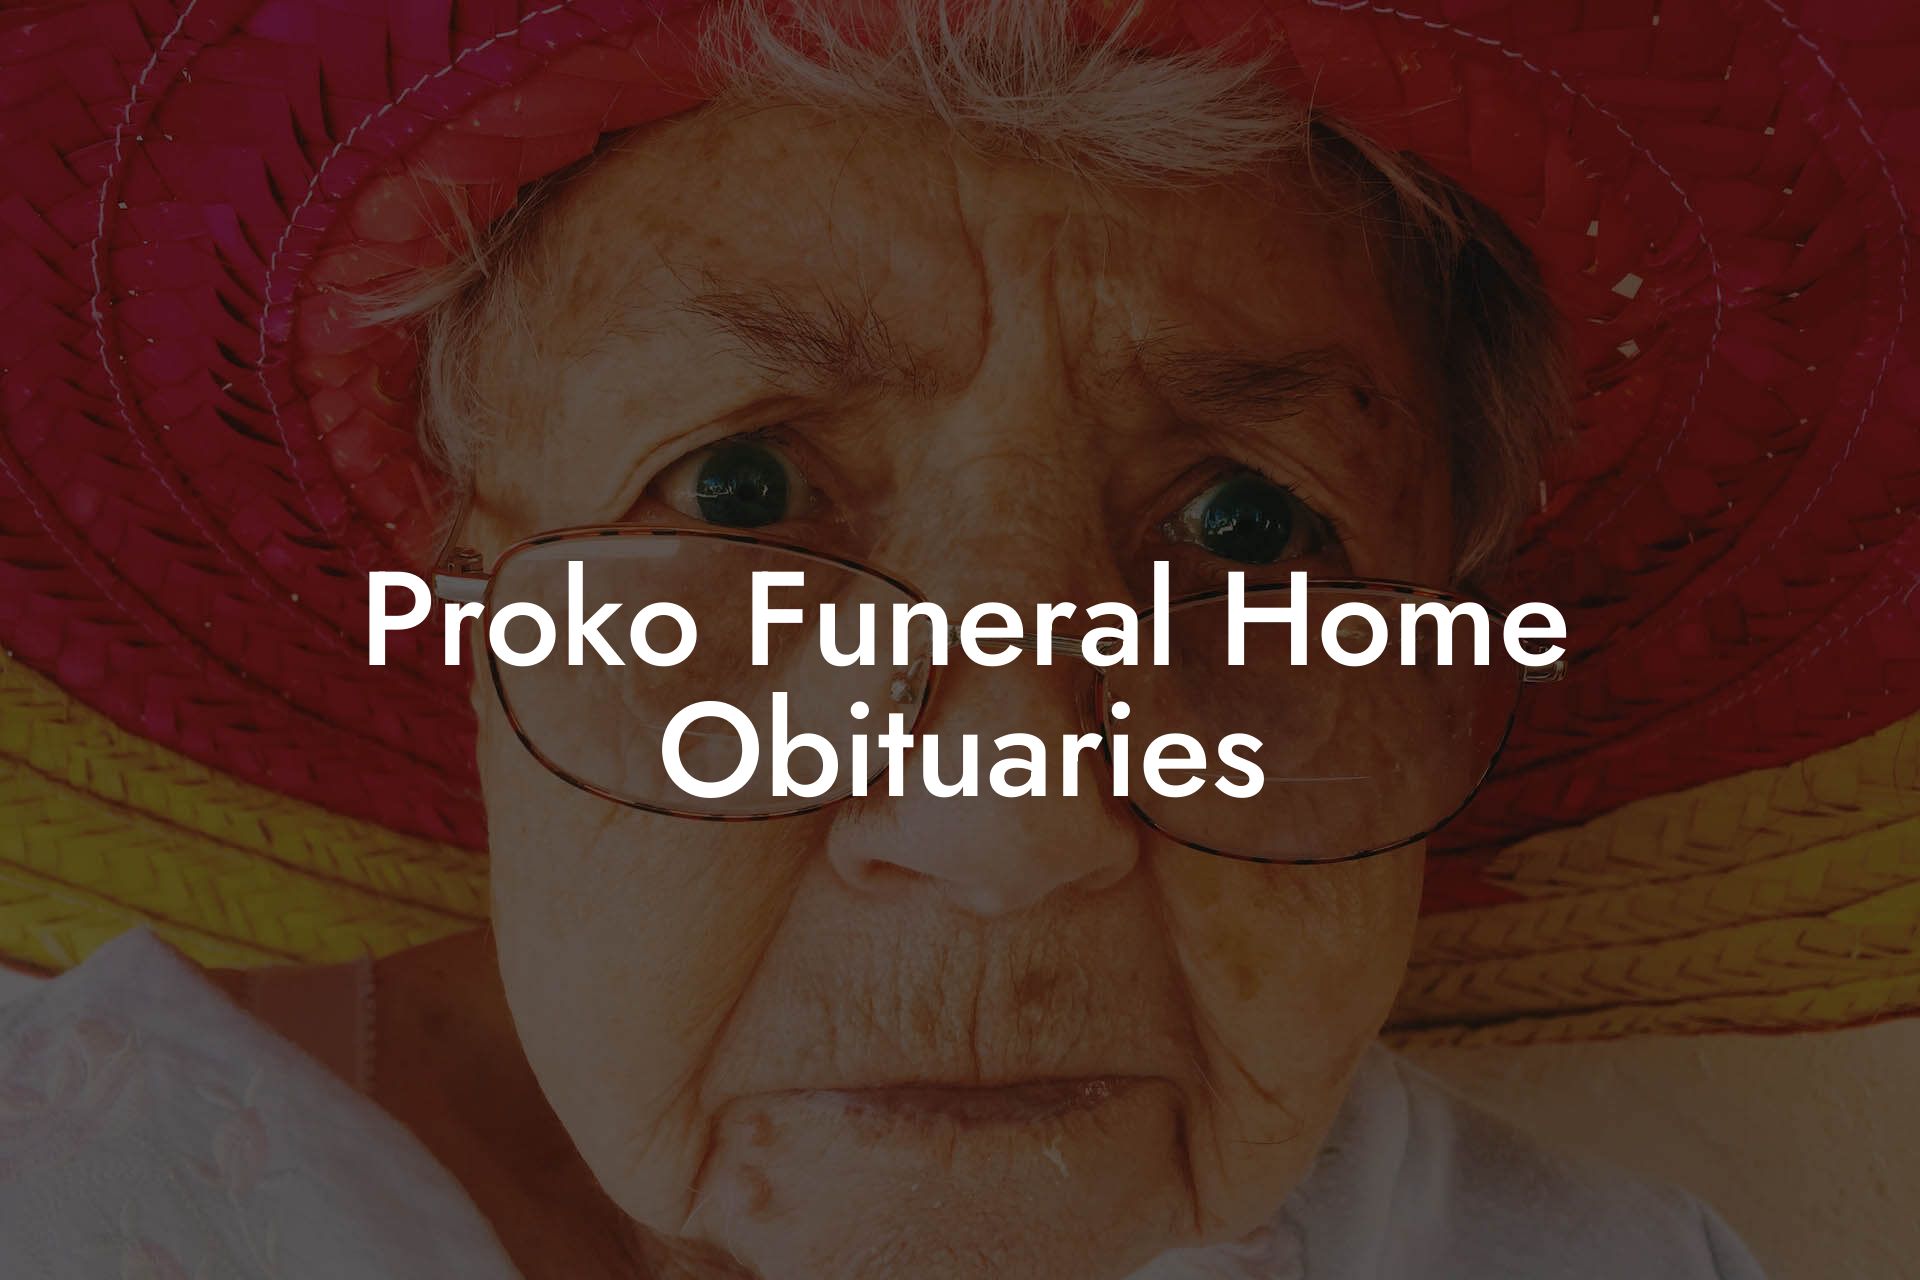 Proko Funeral Home Obituaries